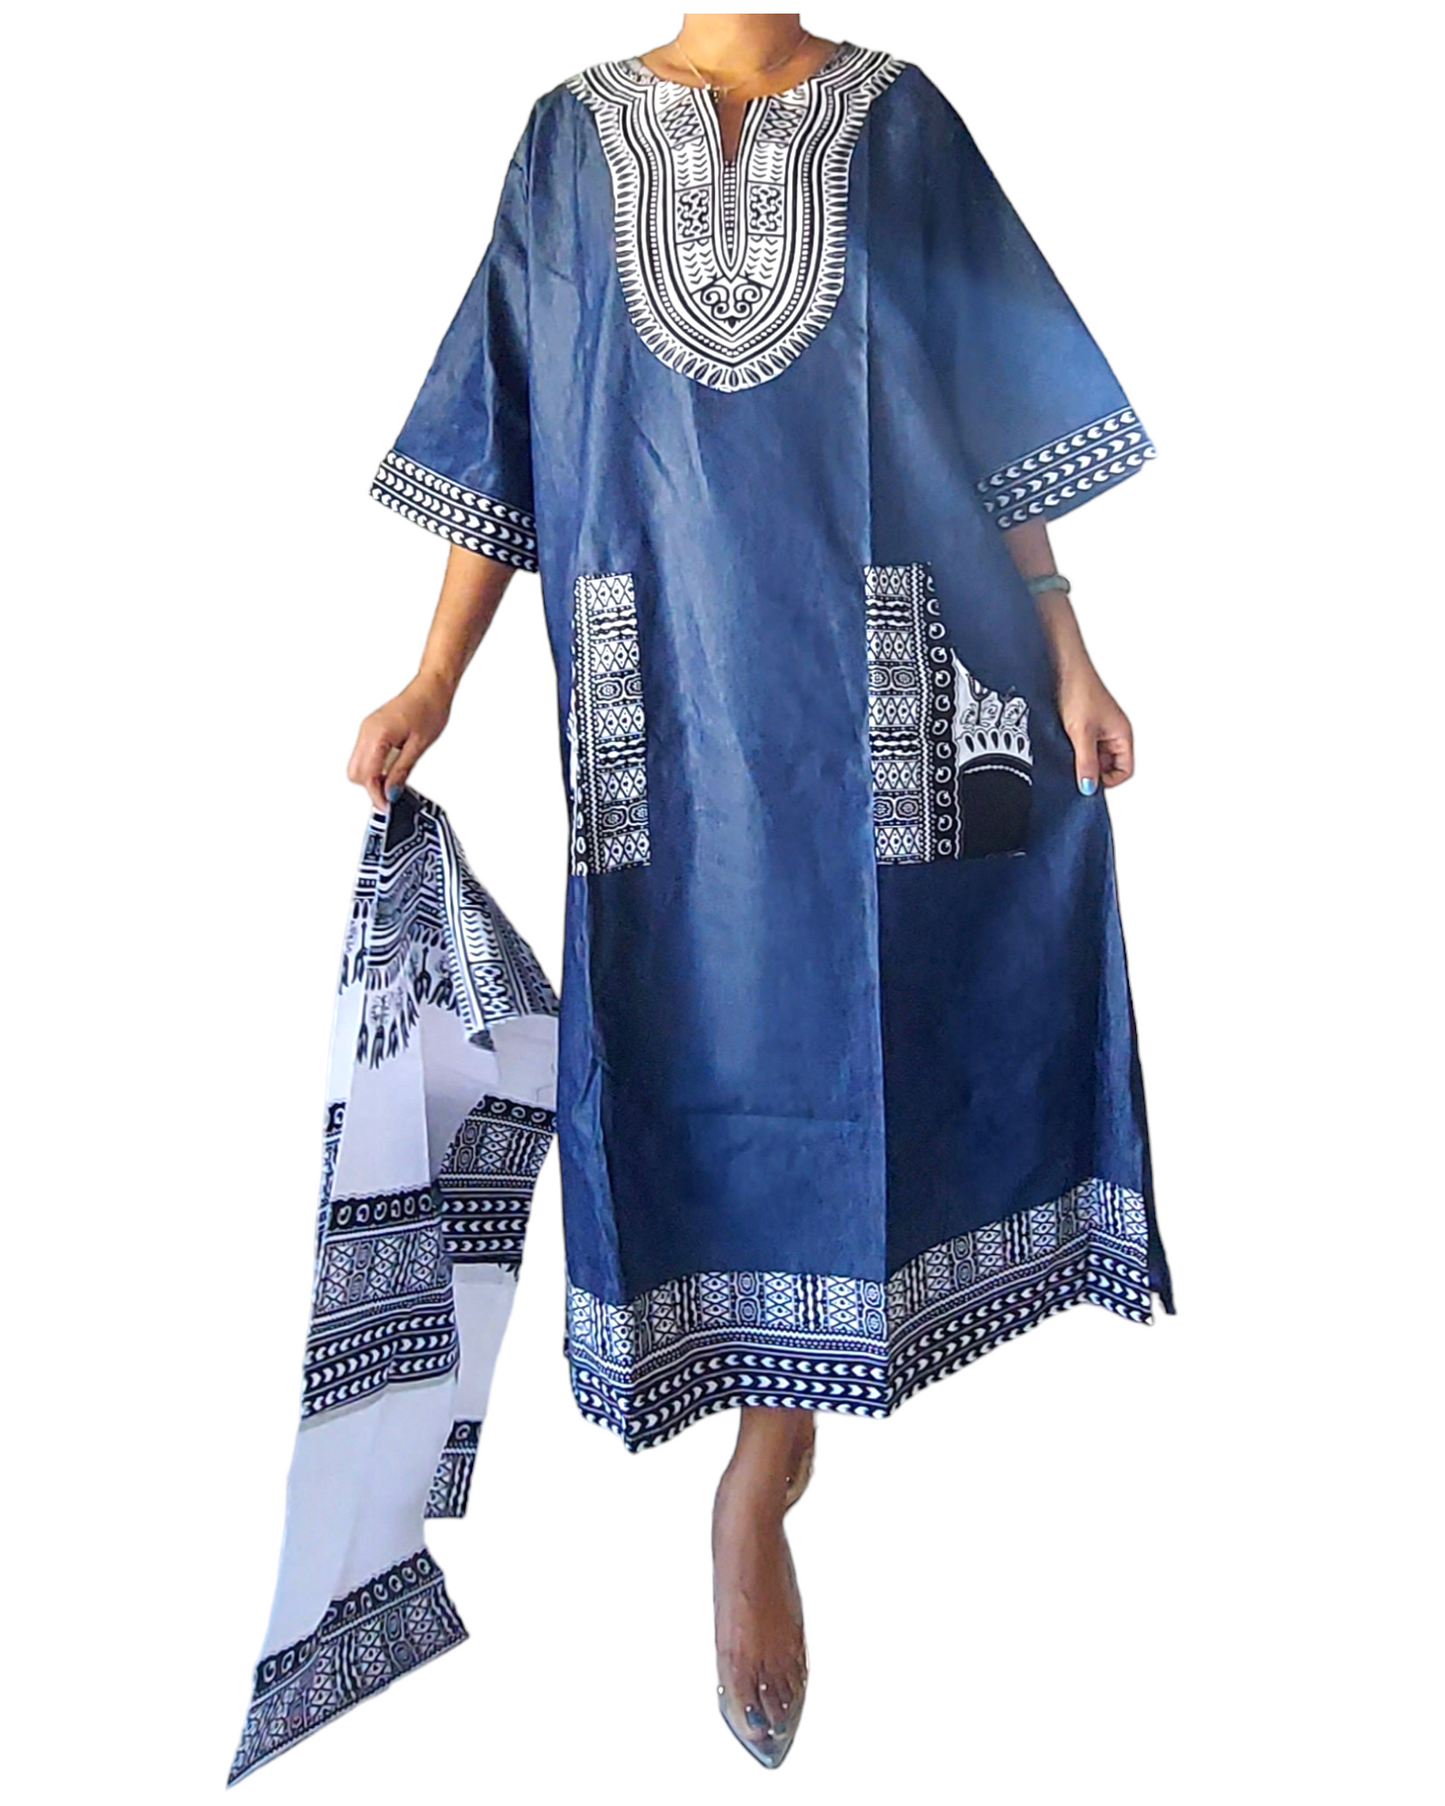 African Long Denim/Dashiki kaftan Dress- Black